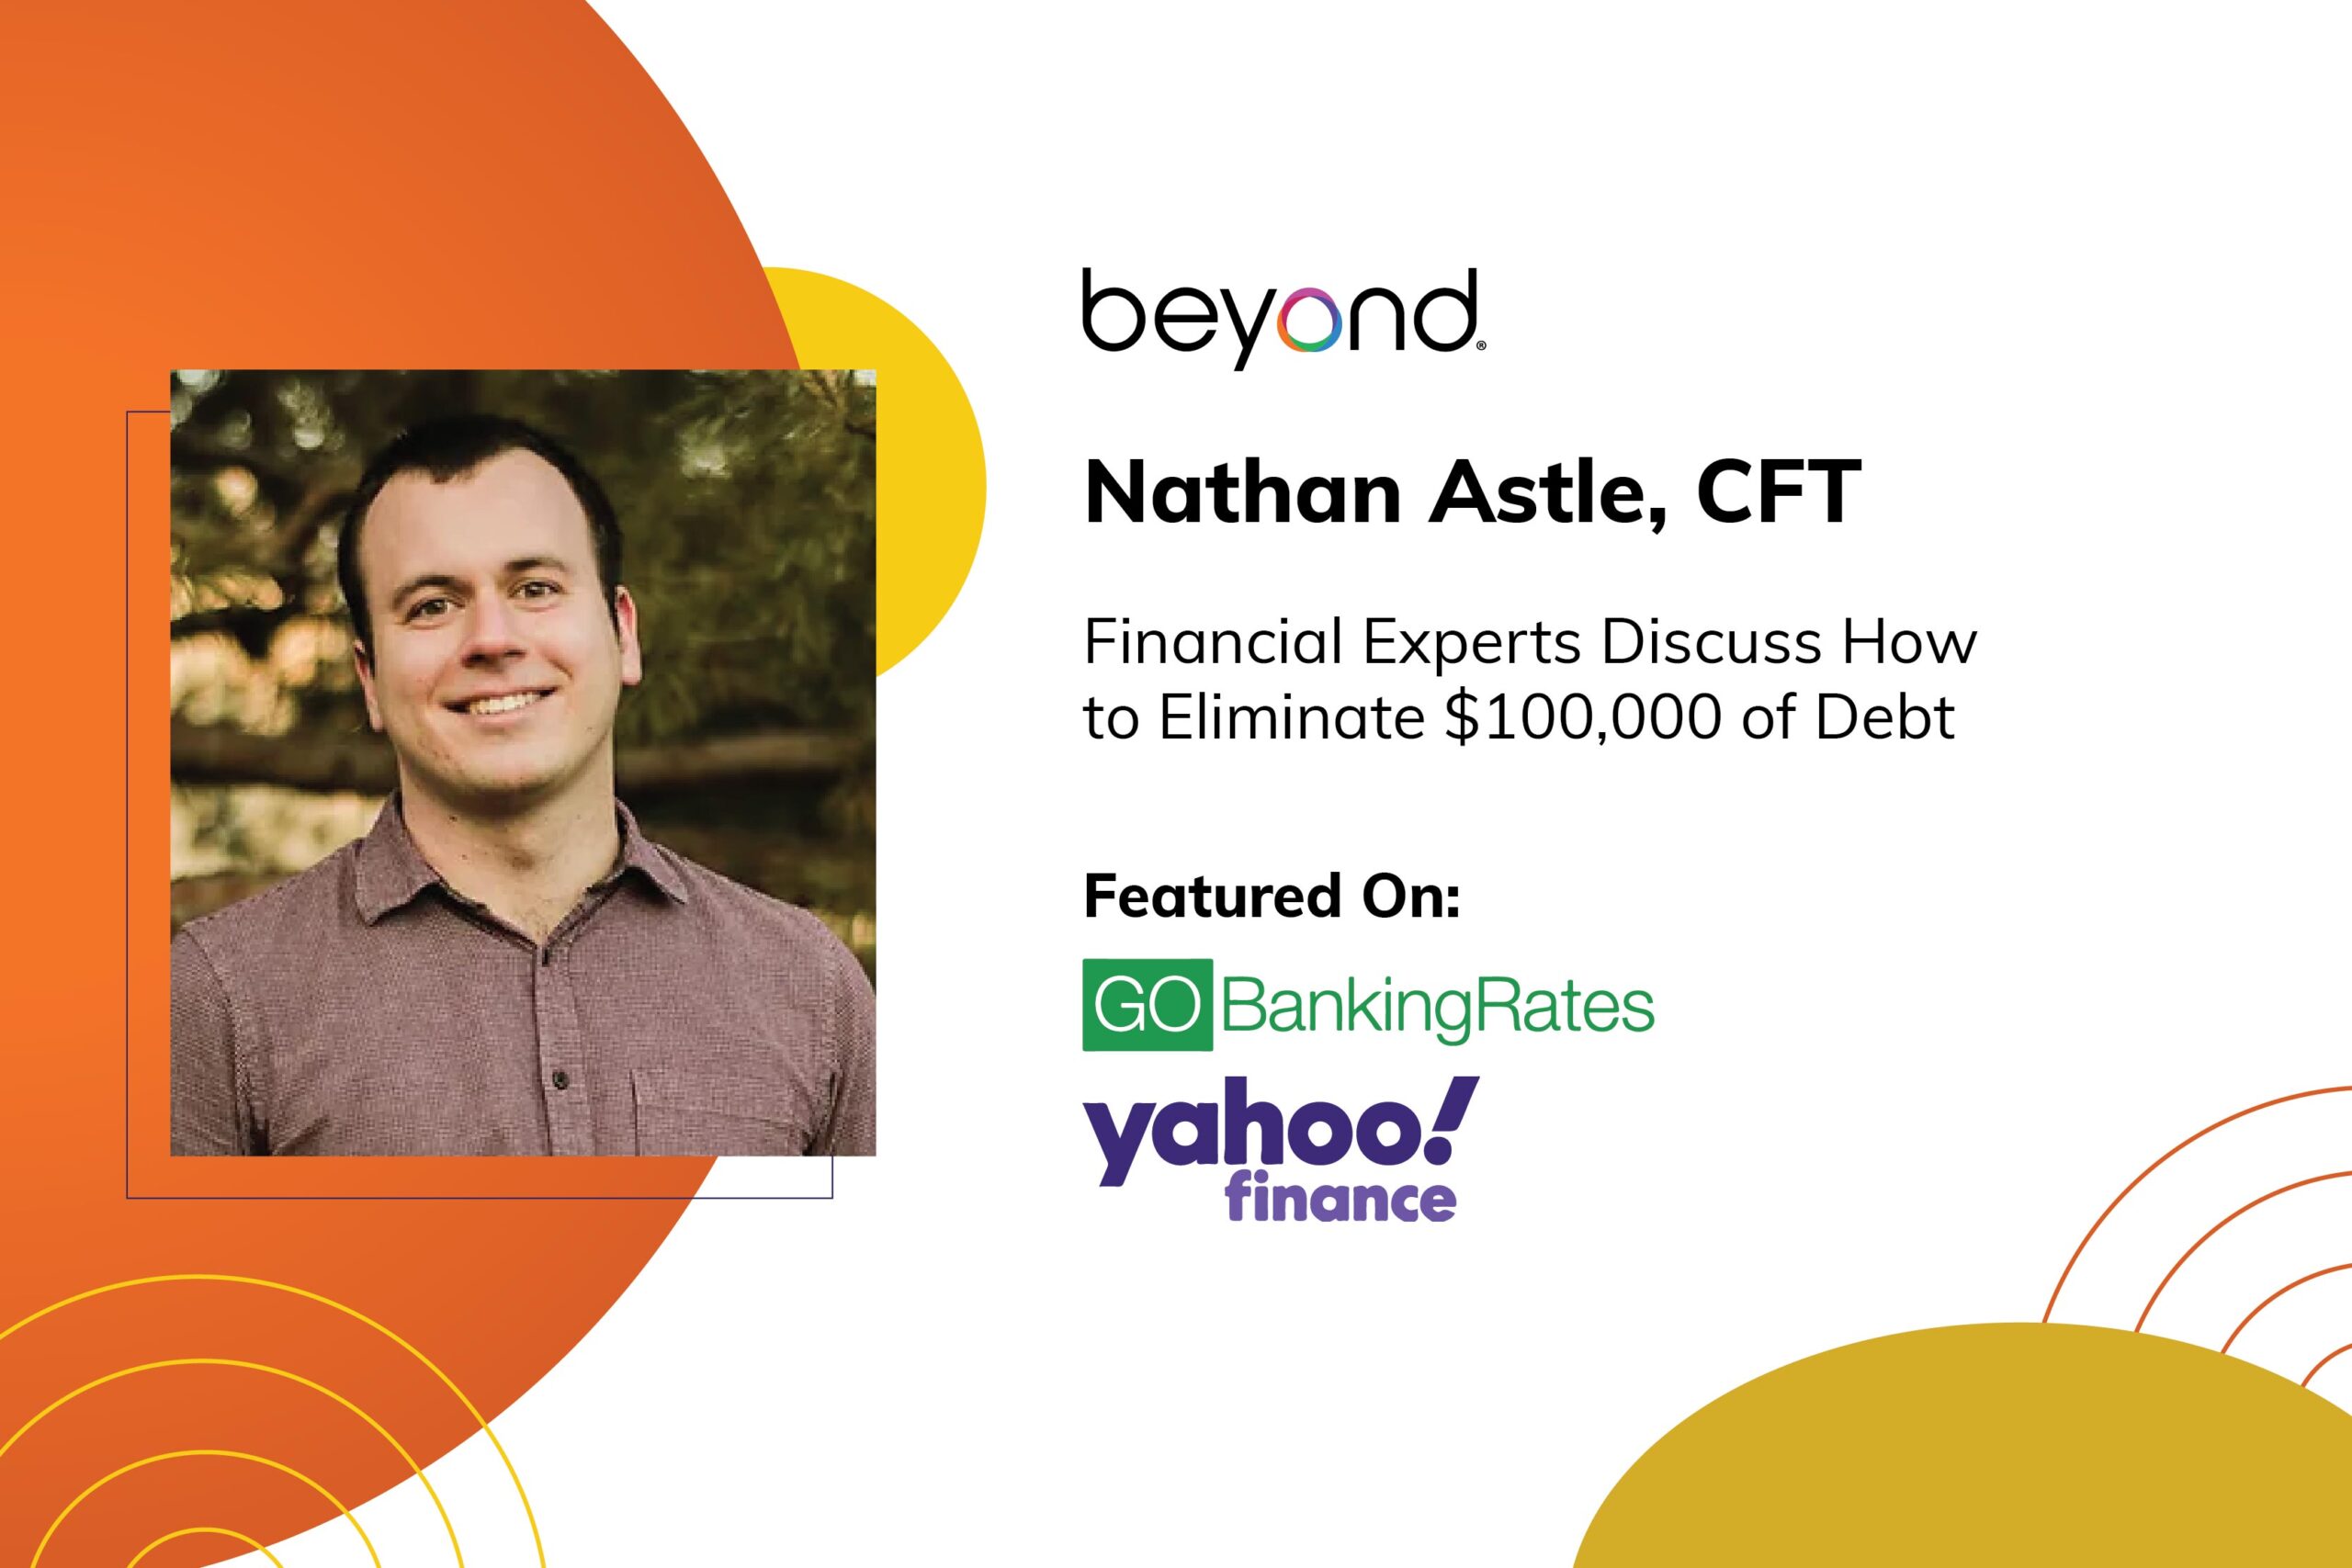 Nathan Astle Beyond Finance interview, recent news